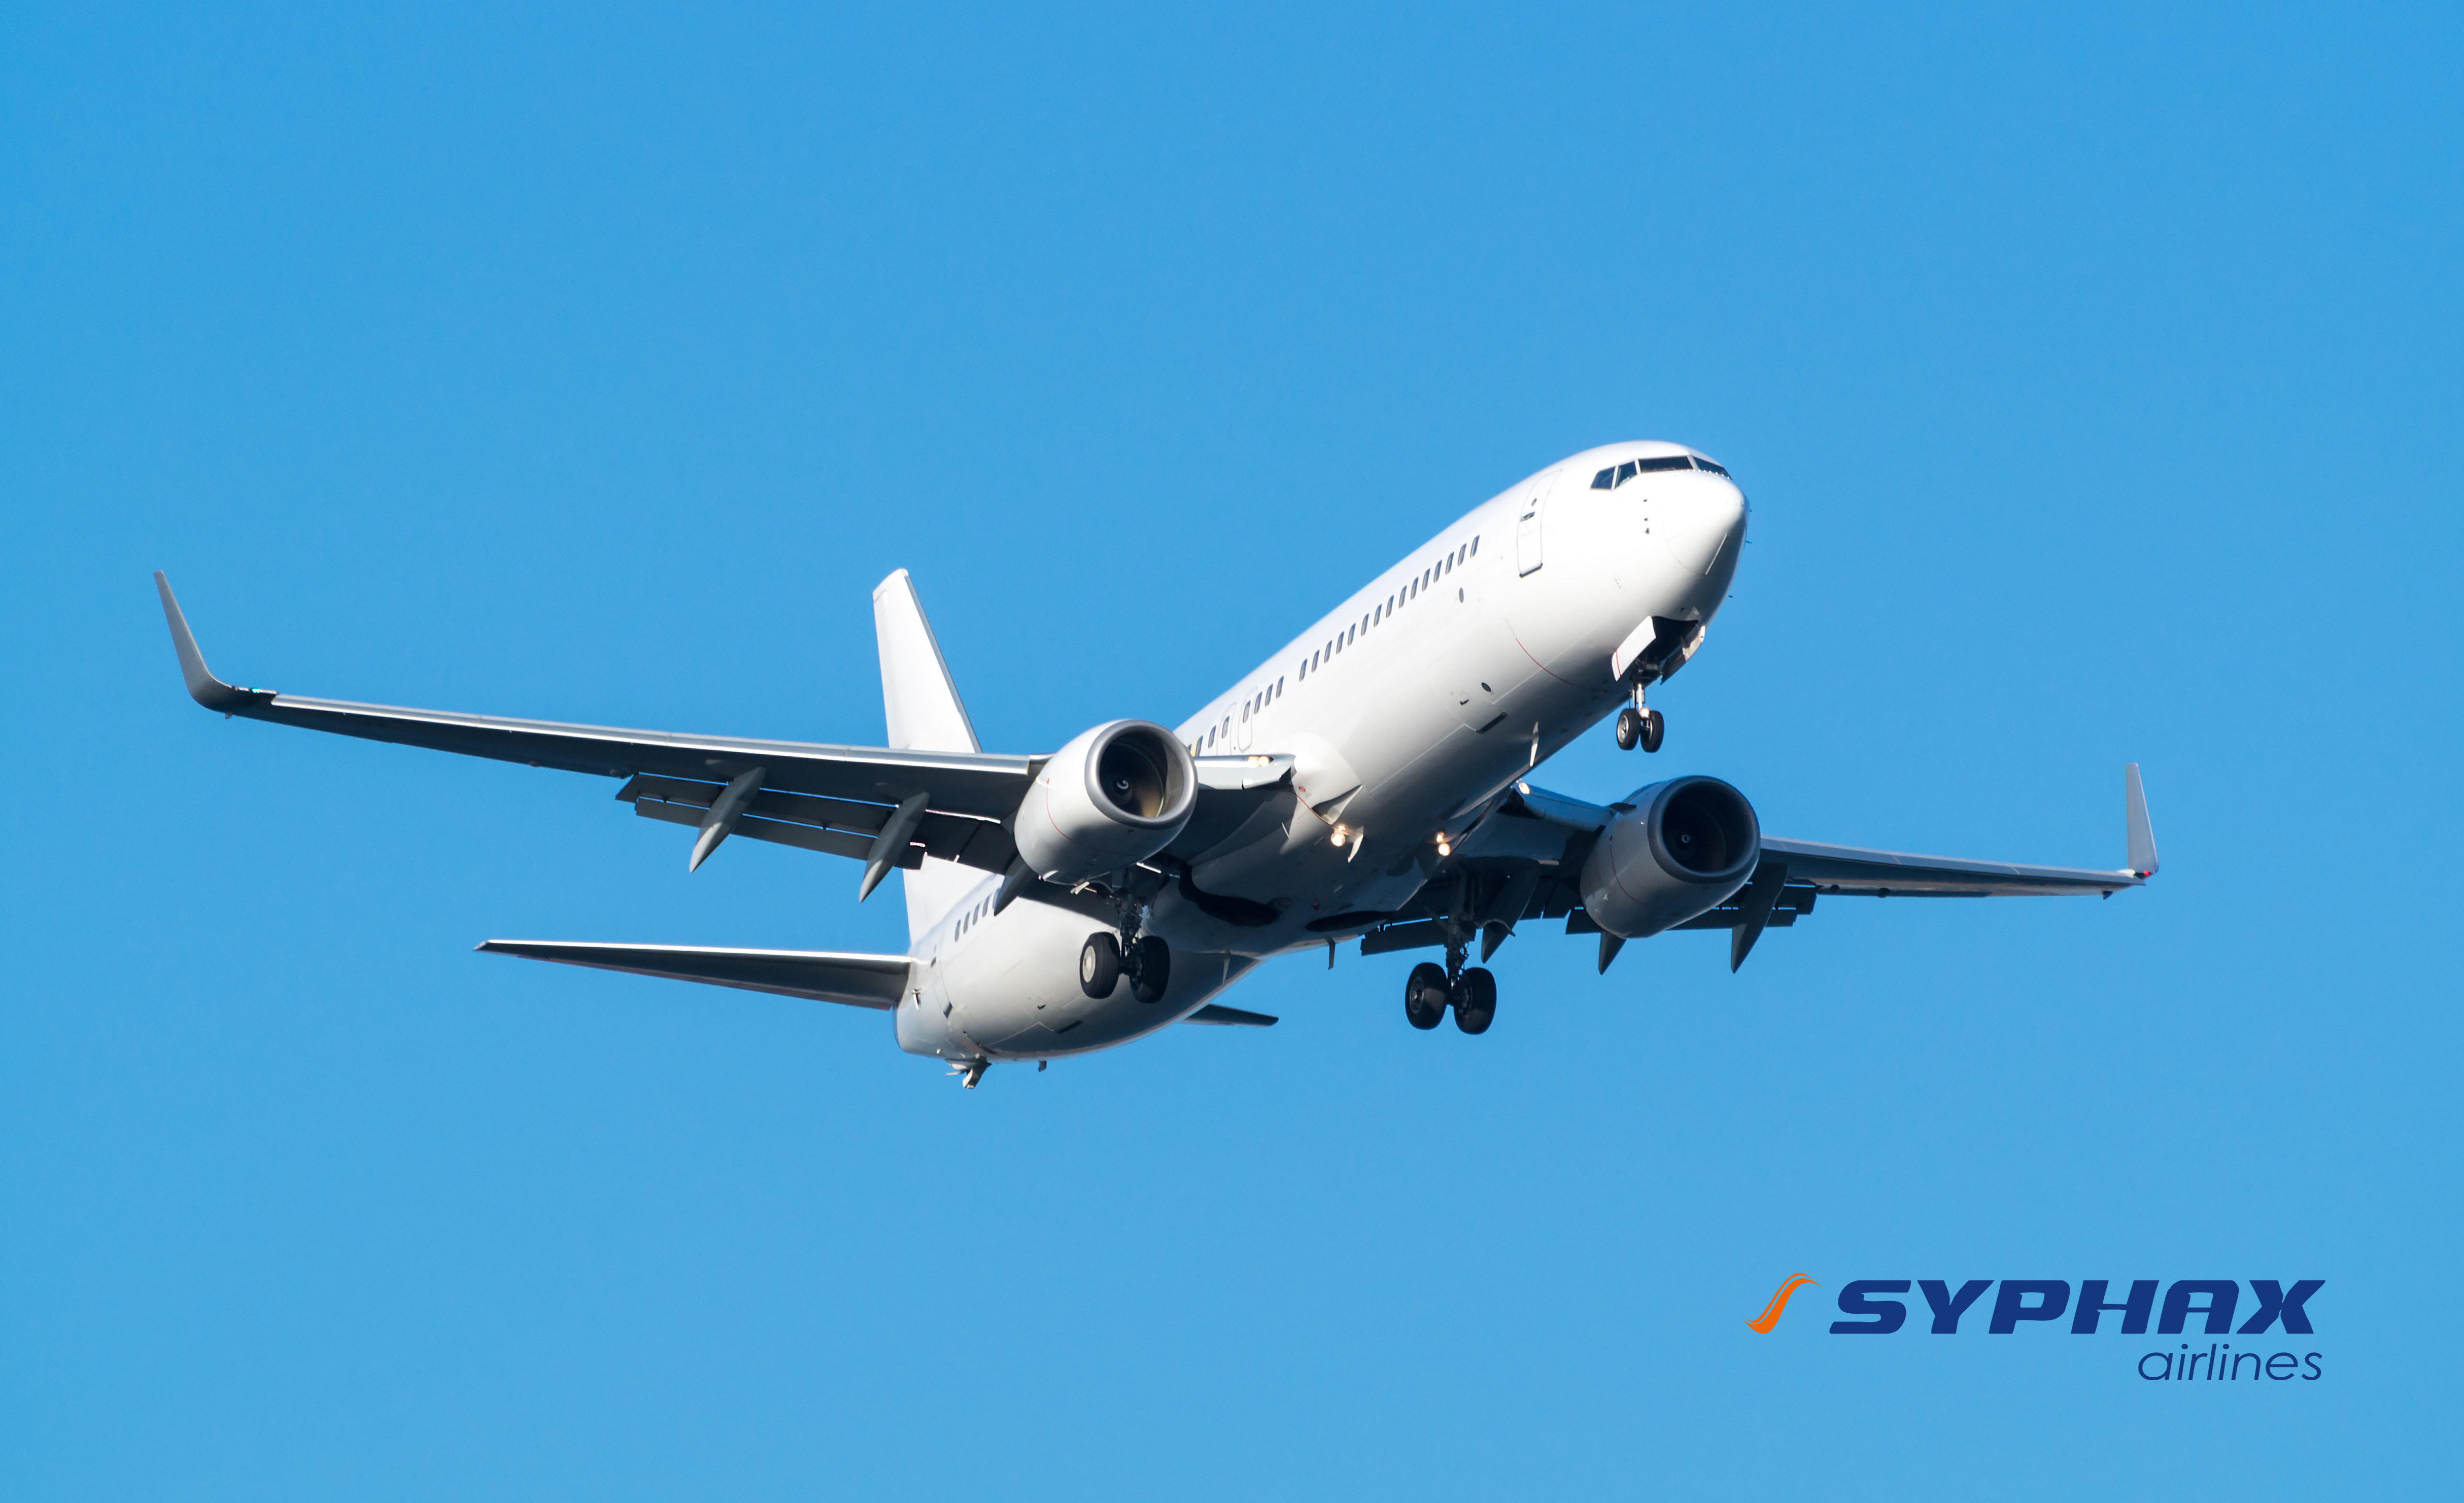 Syphax Airlines chooses Rusada’s ENVISION